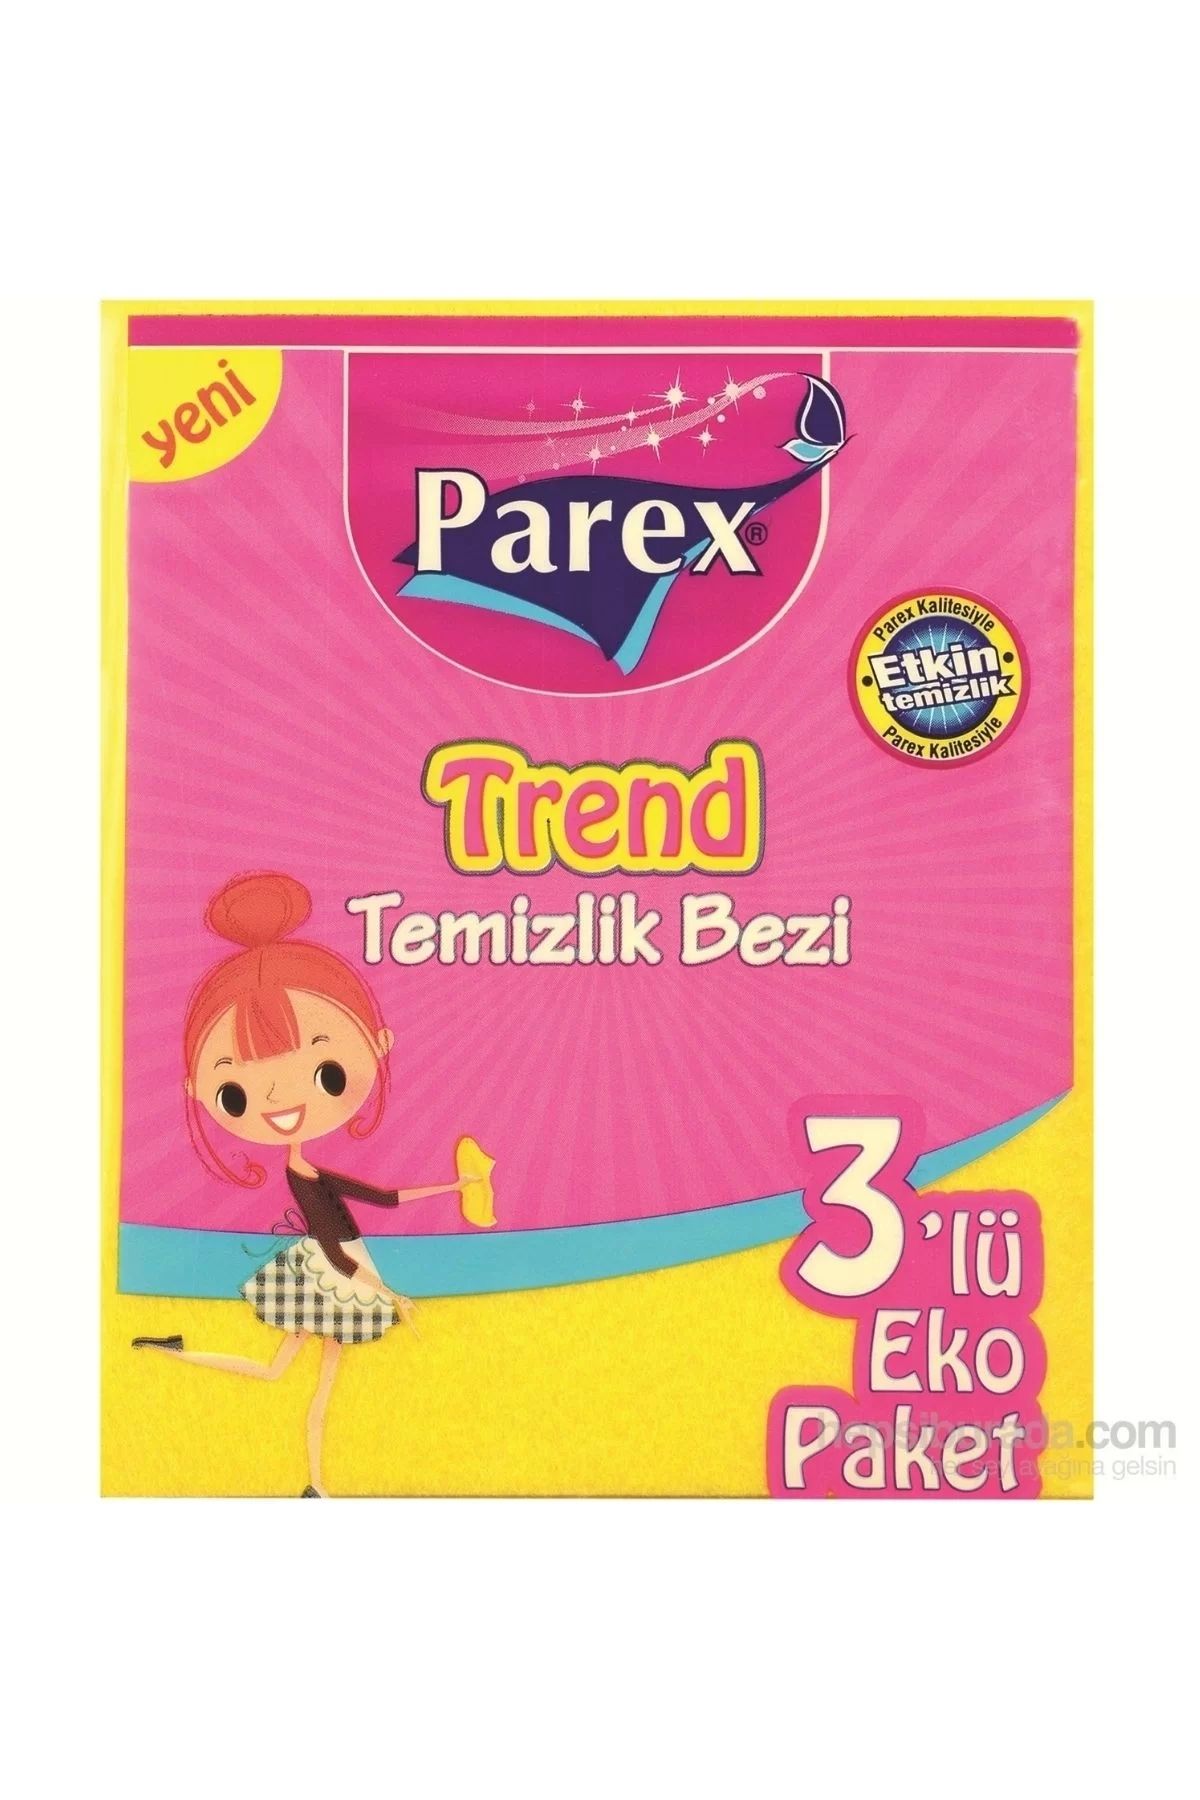 Parex Trend Temizlik Bezi 3 Lü